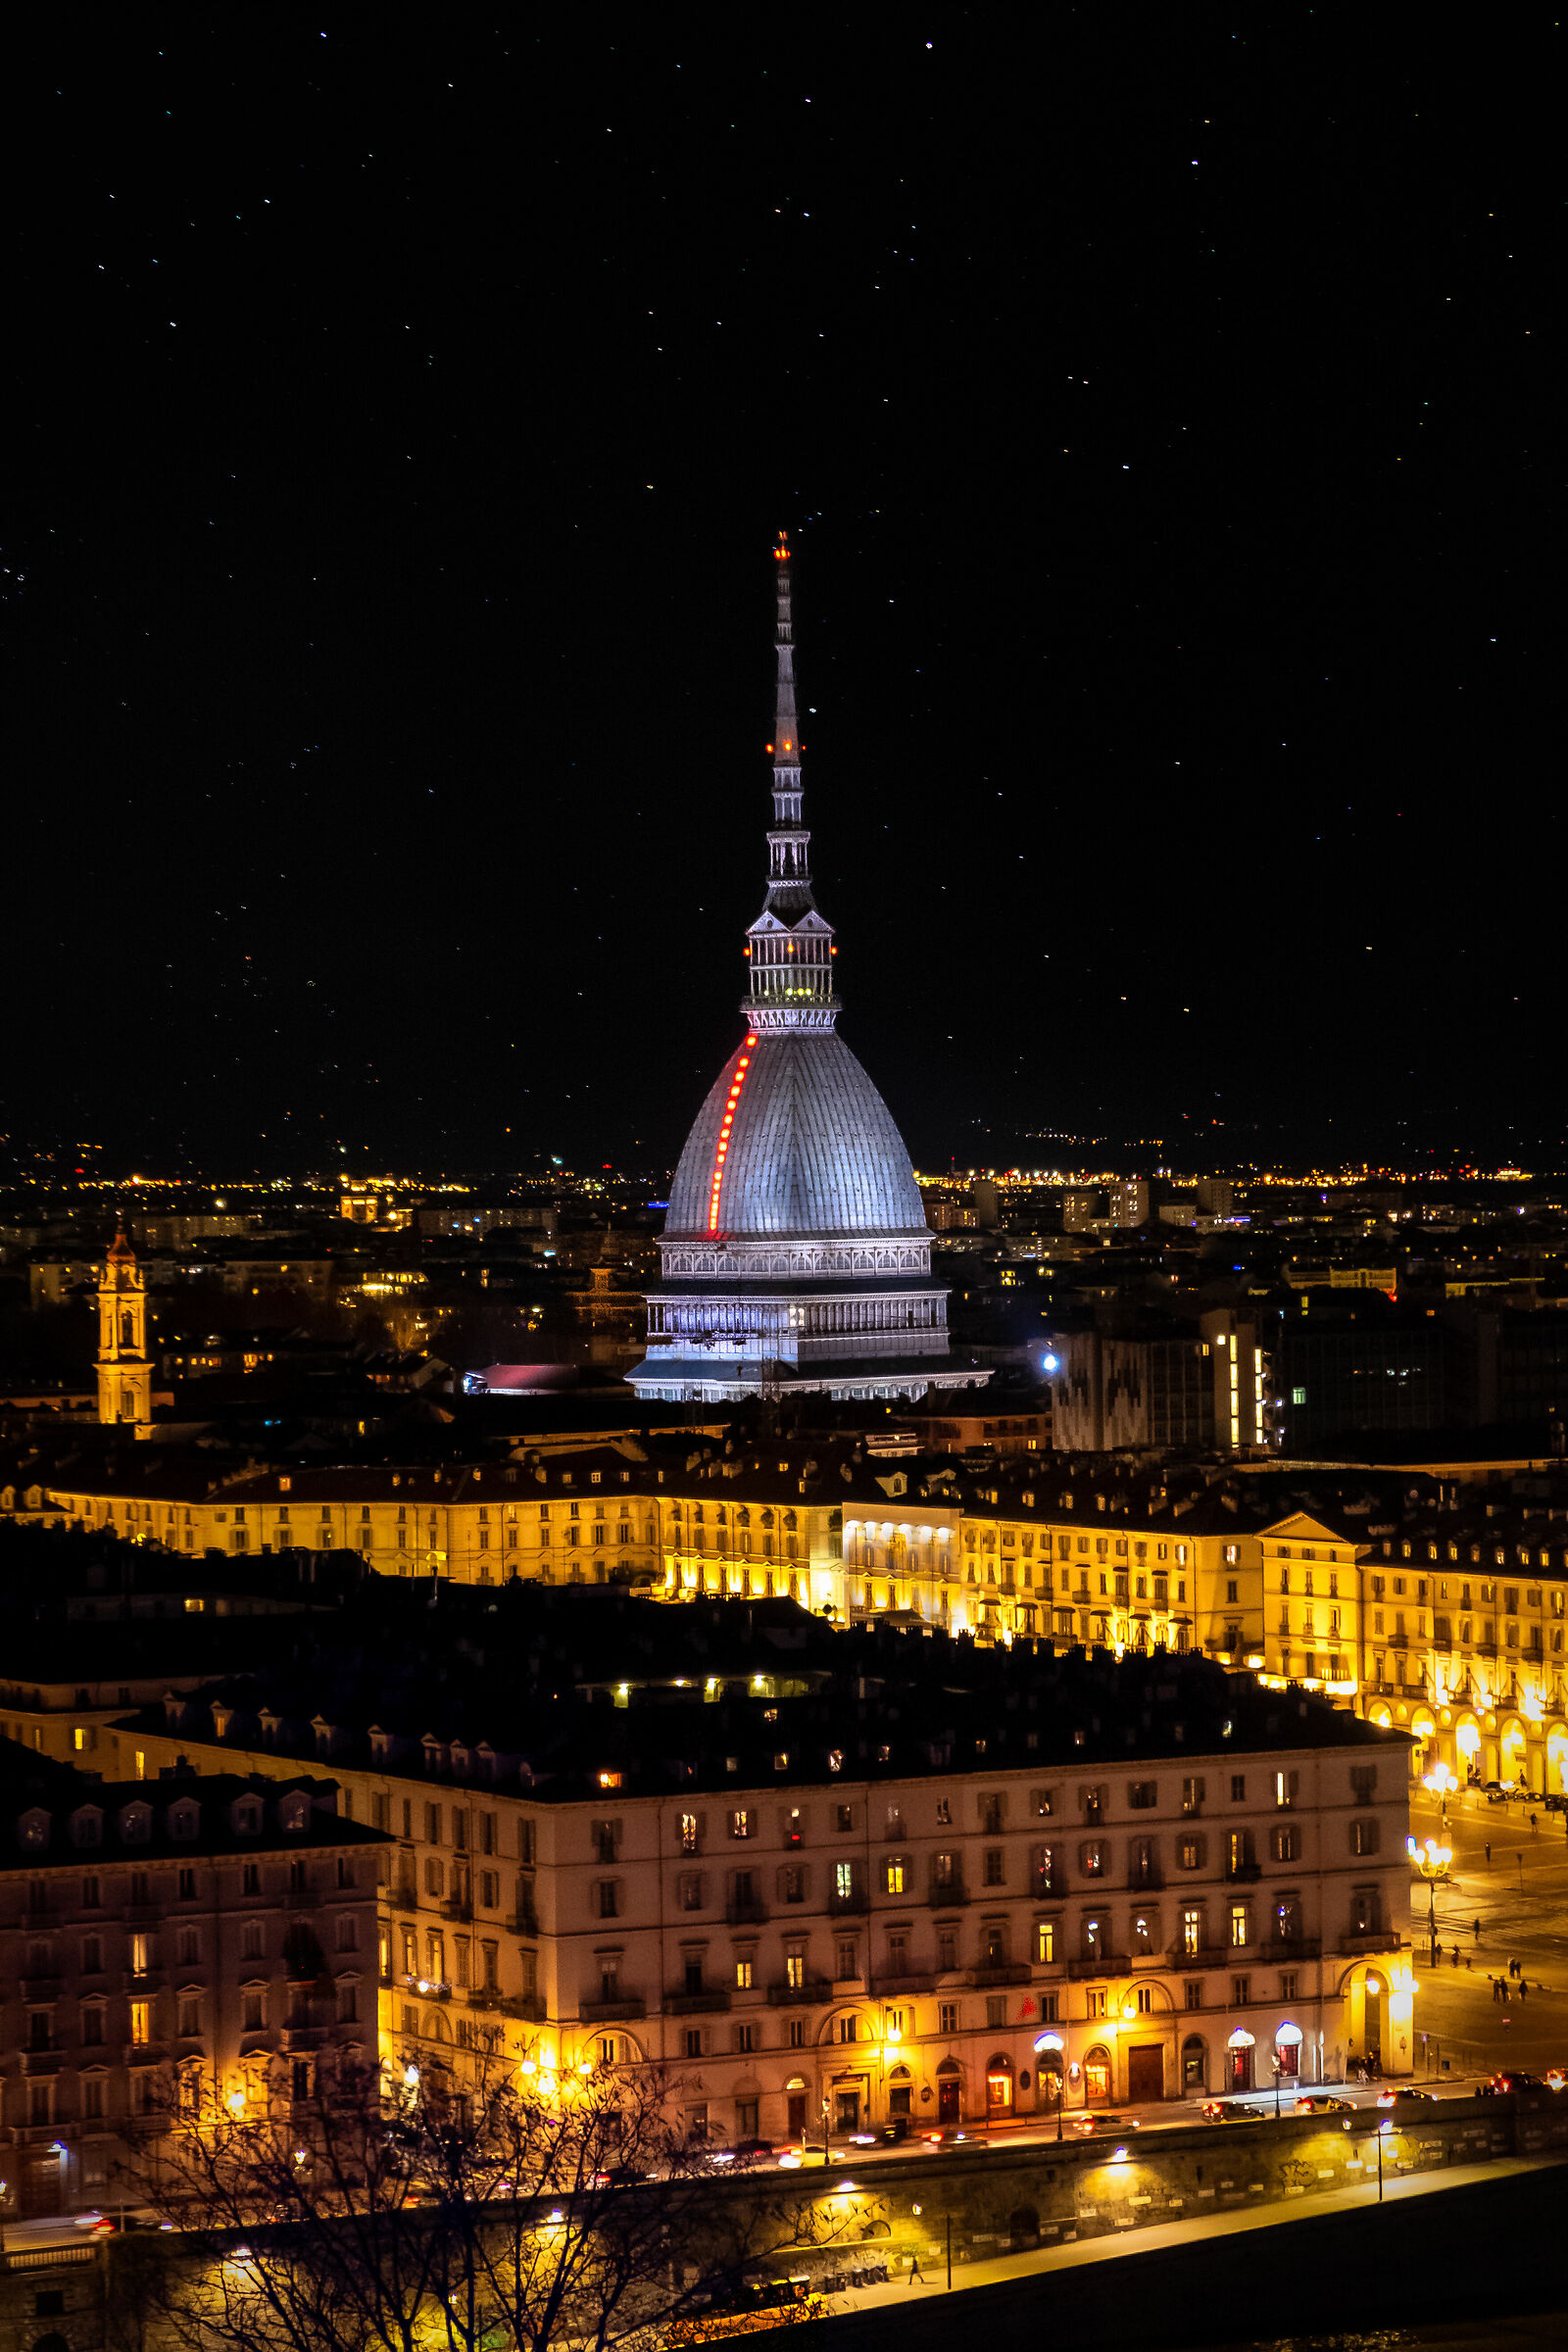 Turin's golden lights...